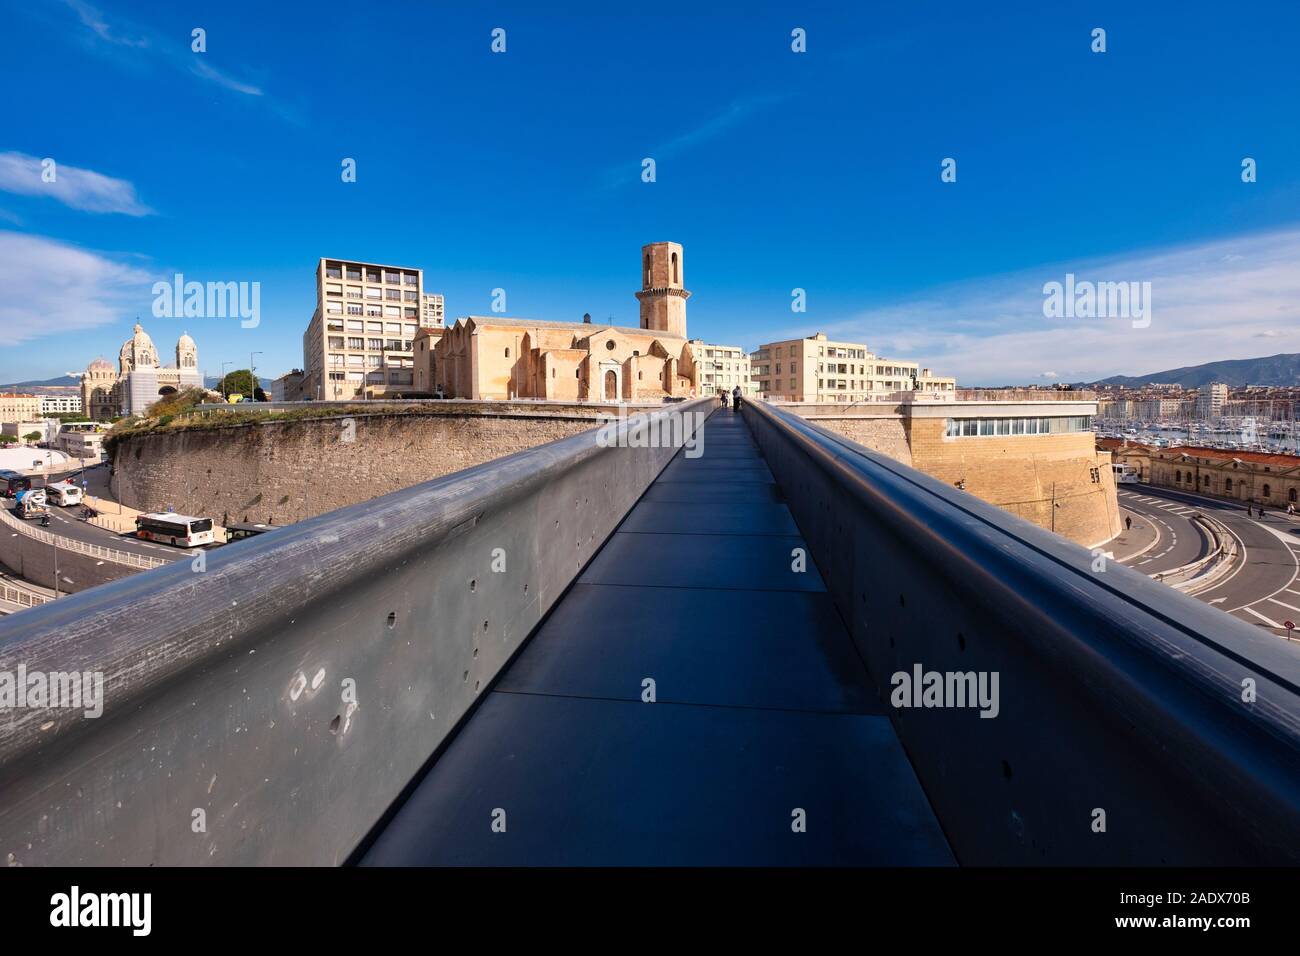 Passerelle Parvis-St Jean footbridge towards the Saint-Laurent de Marseille catholic church in Marseille, France Stock Photo